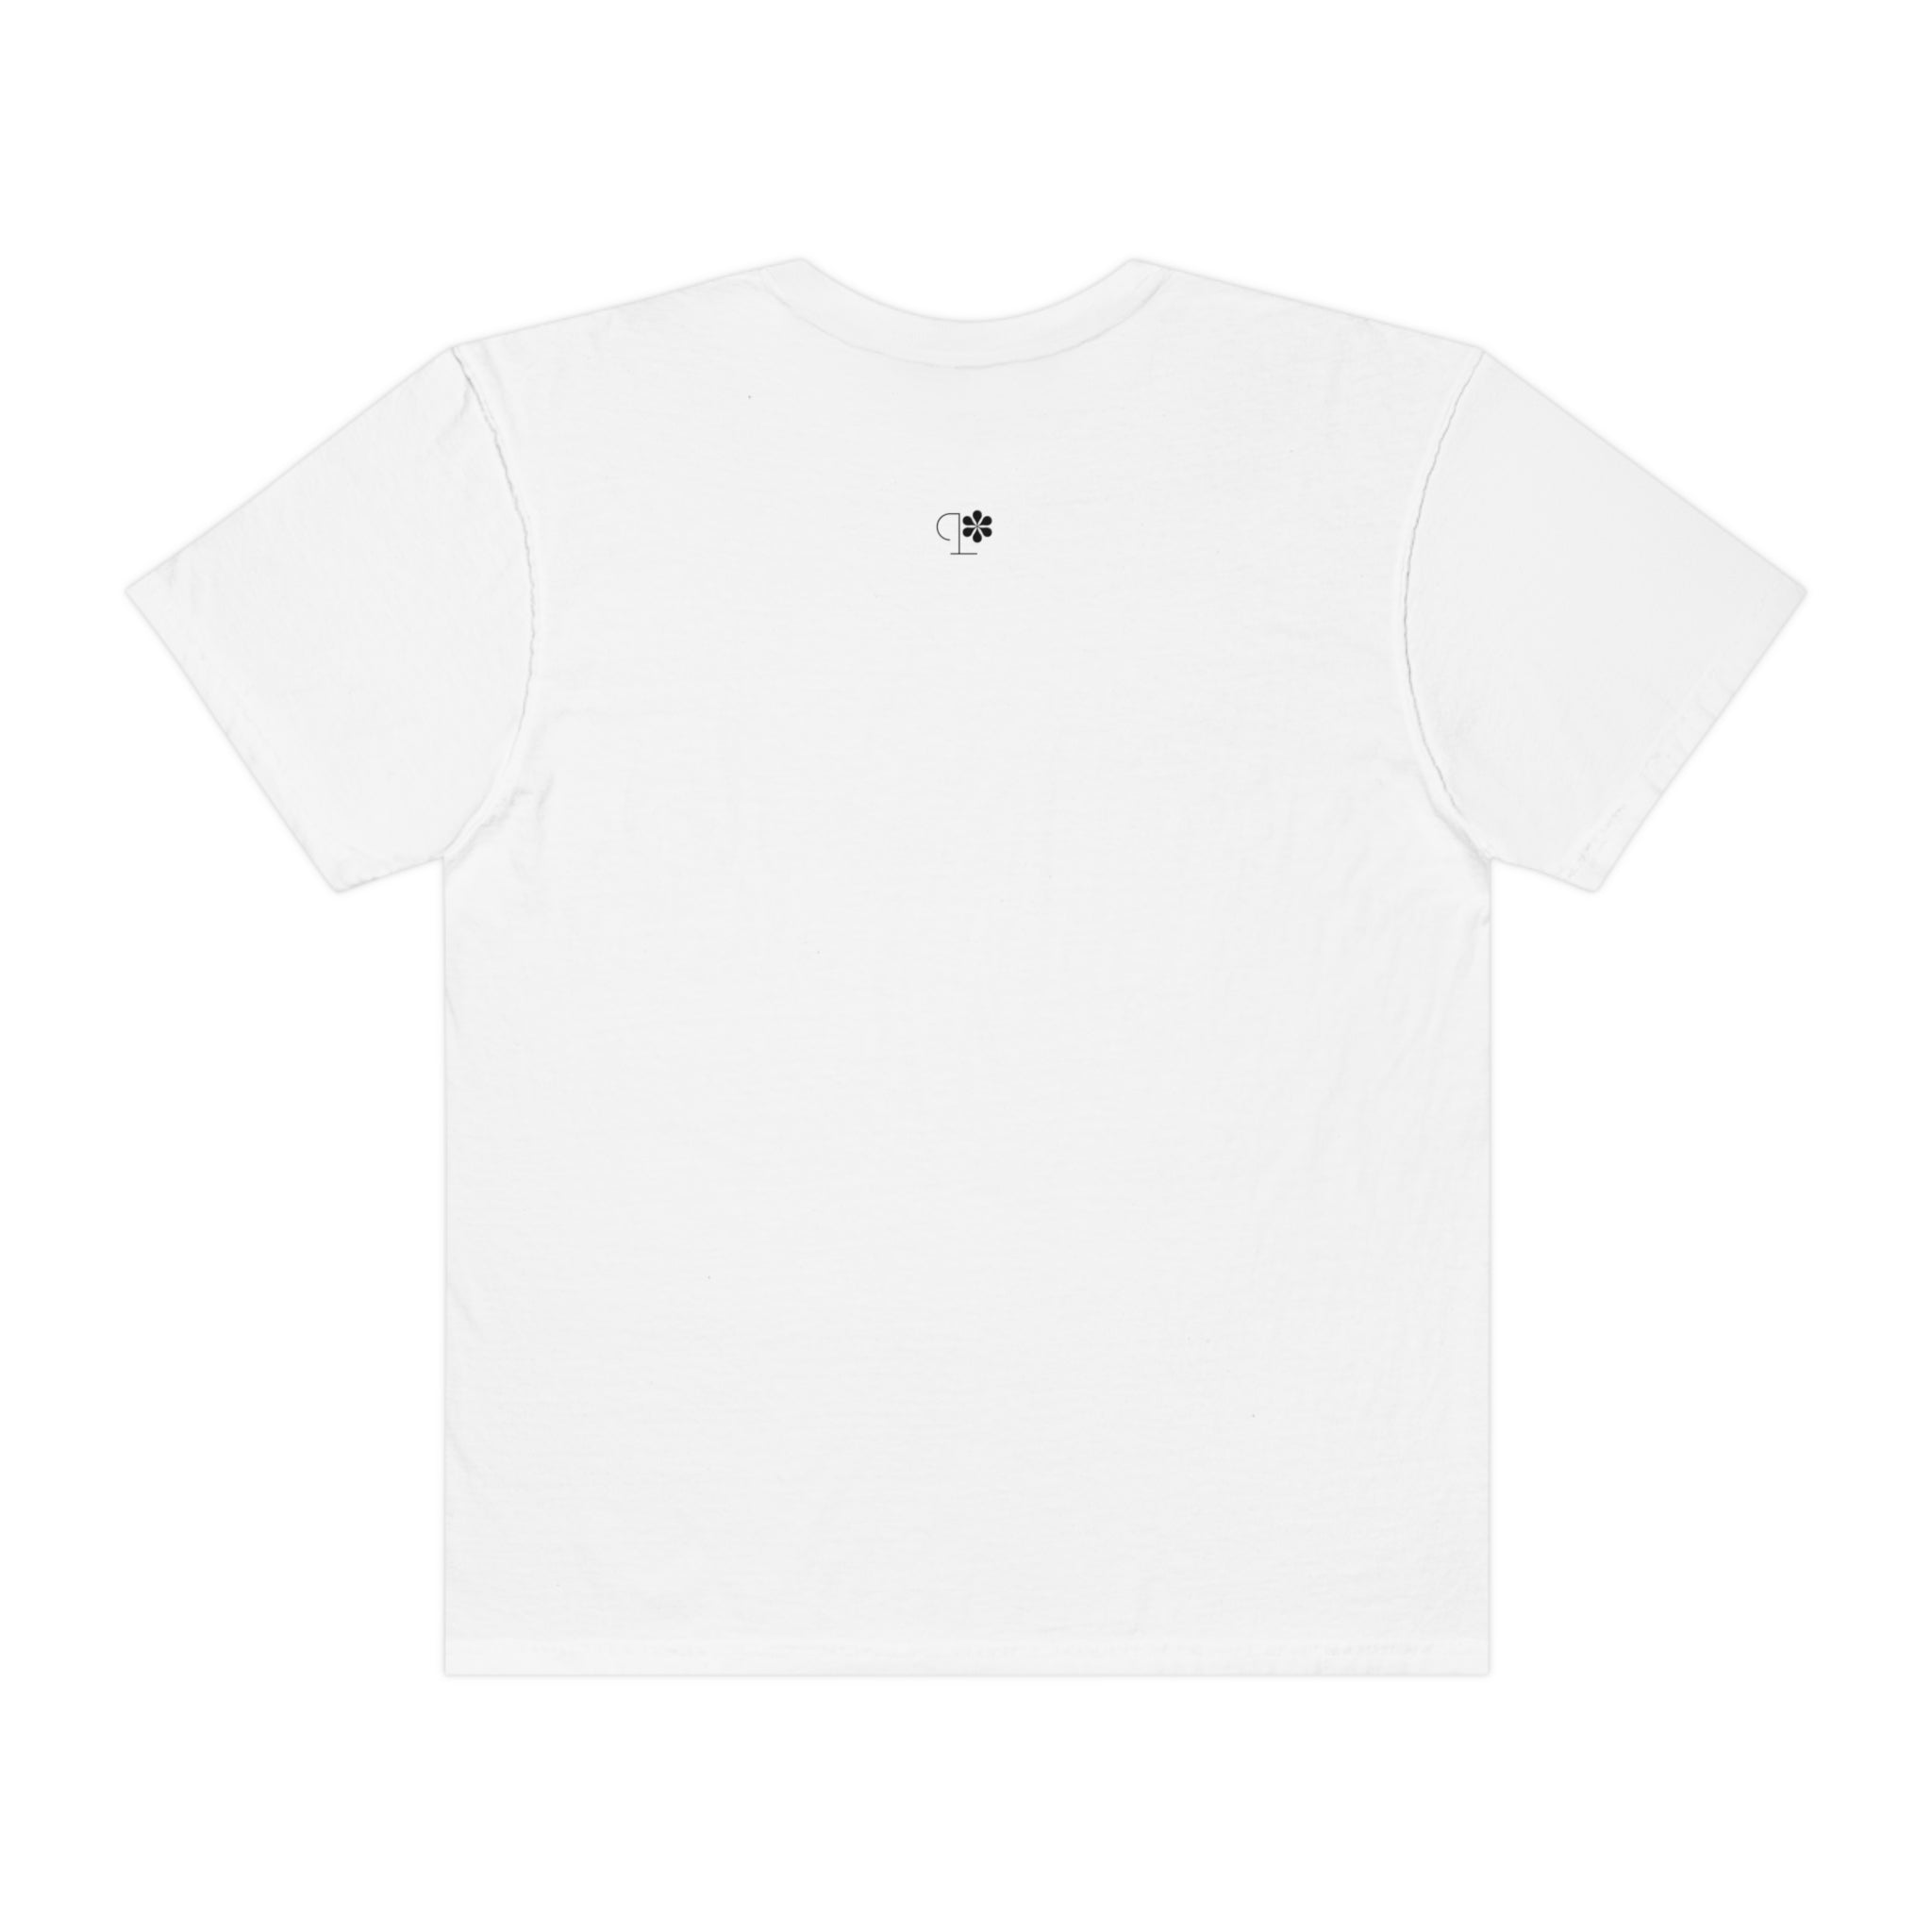 Ordinary White T-shirt